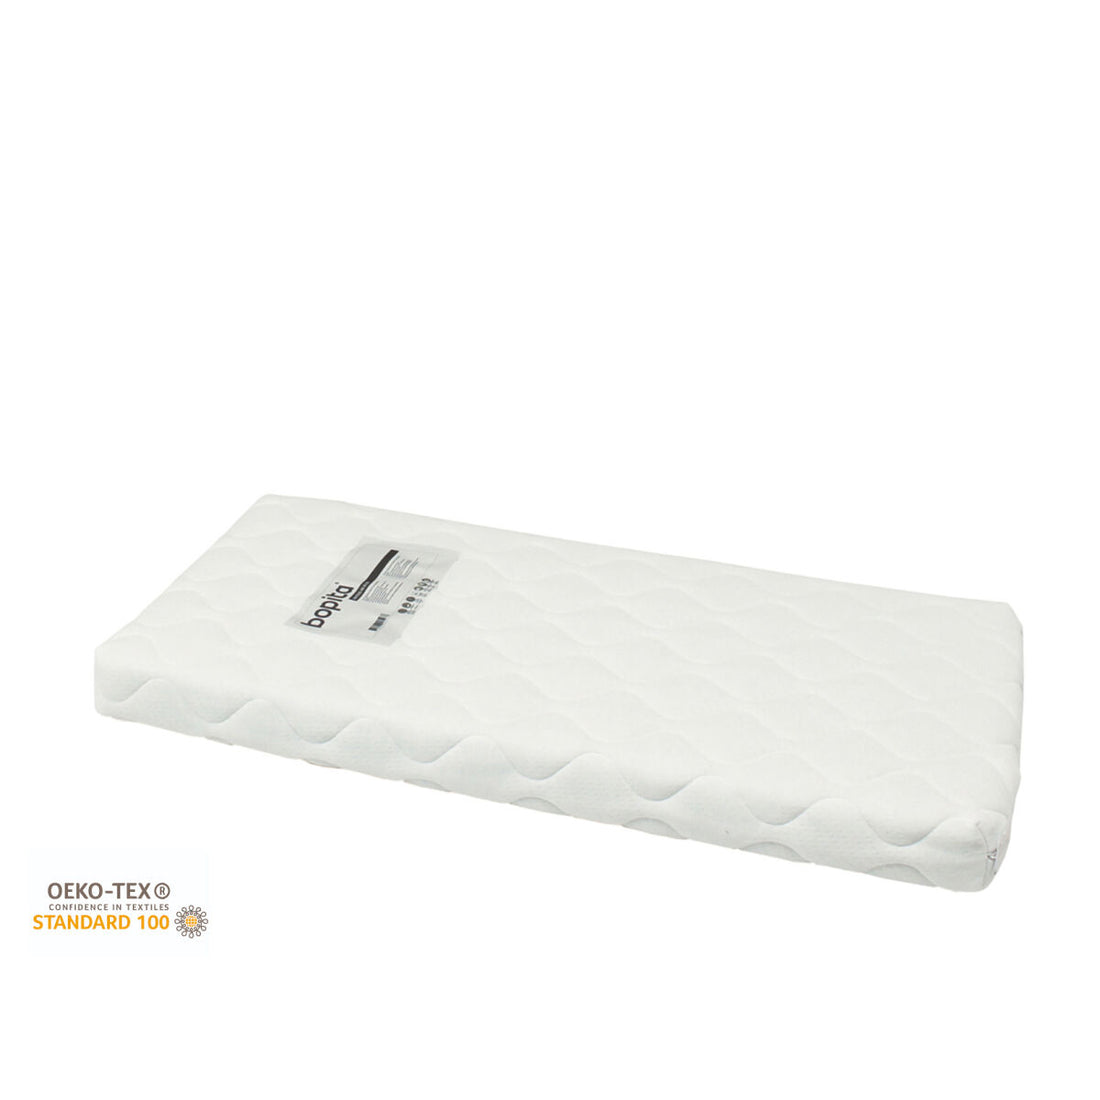 bopita-mattress-hr40-with-removable-cover-60x120cm-bopt-254000- (2)